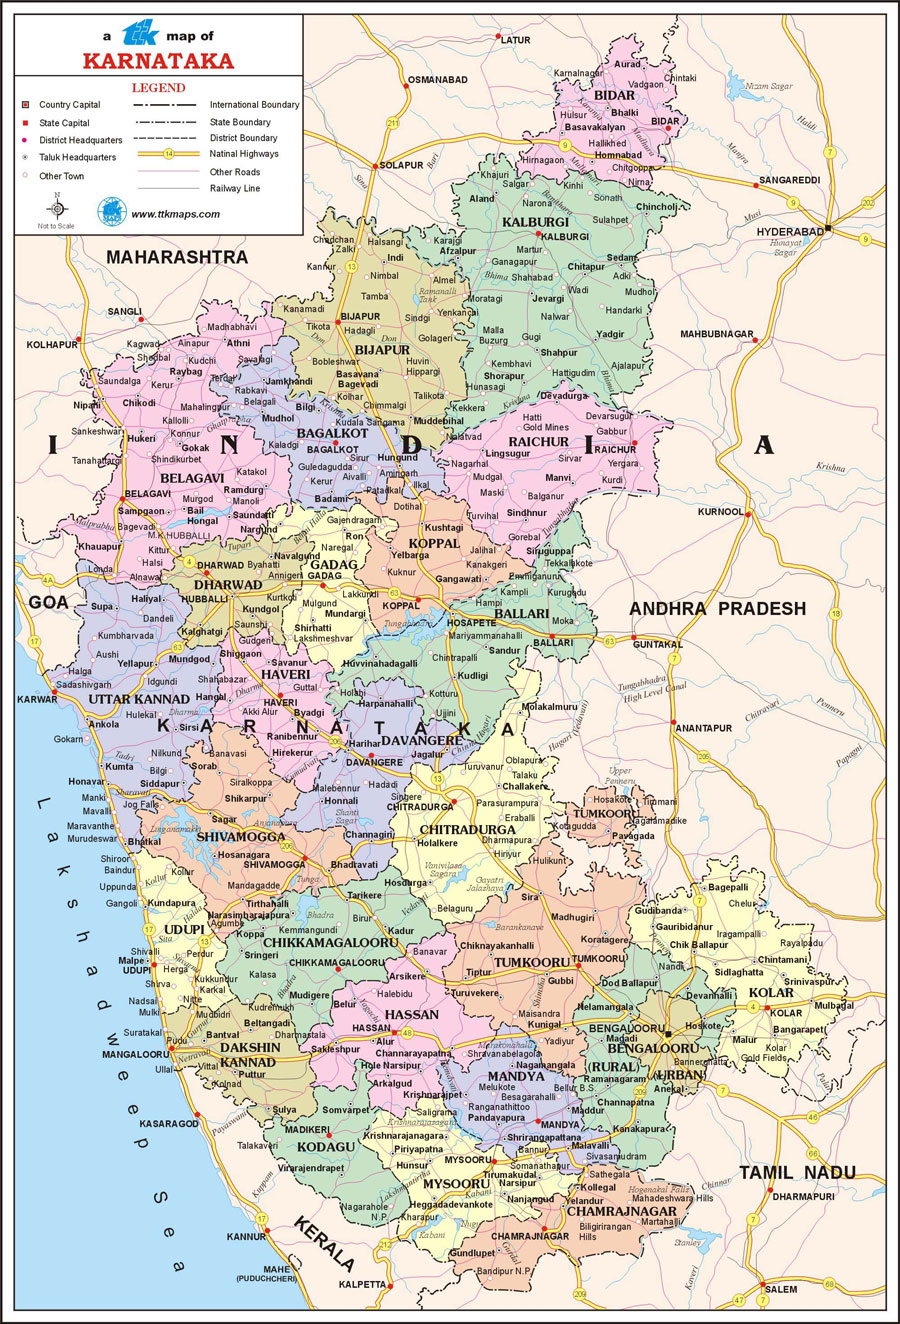 karnataka tourist places on map